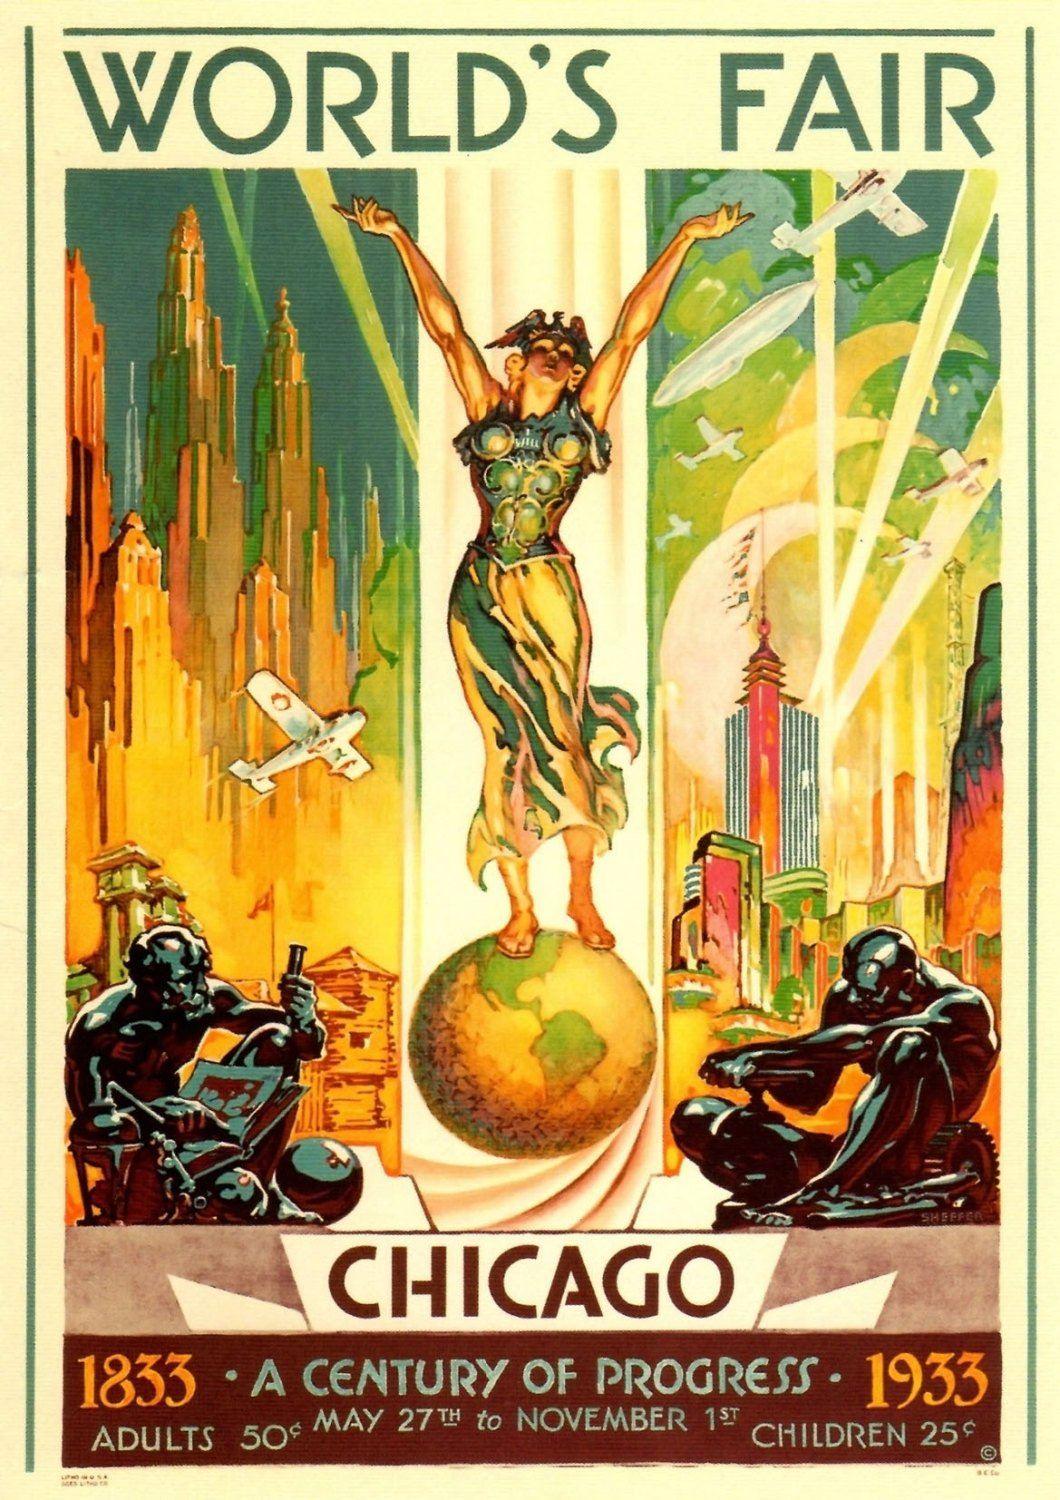 WORLD'S FAIR POSTER: Vintage Green Chicago Advert Reprint - Pimlico Prints